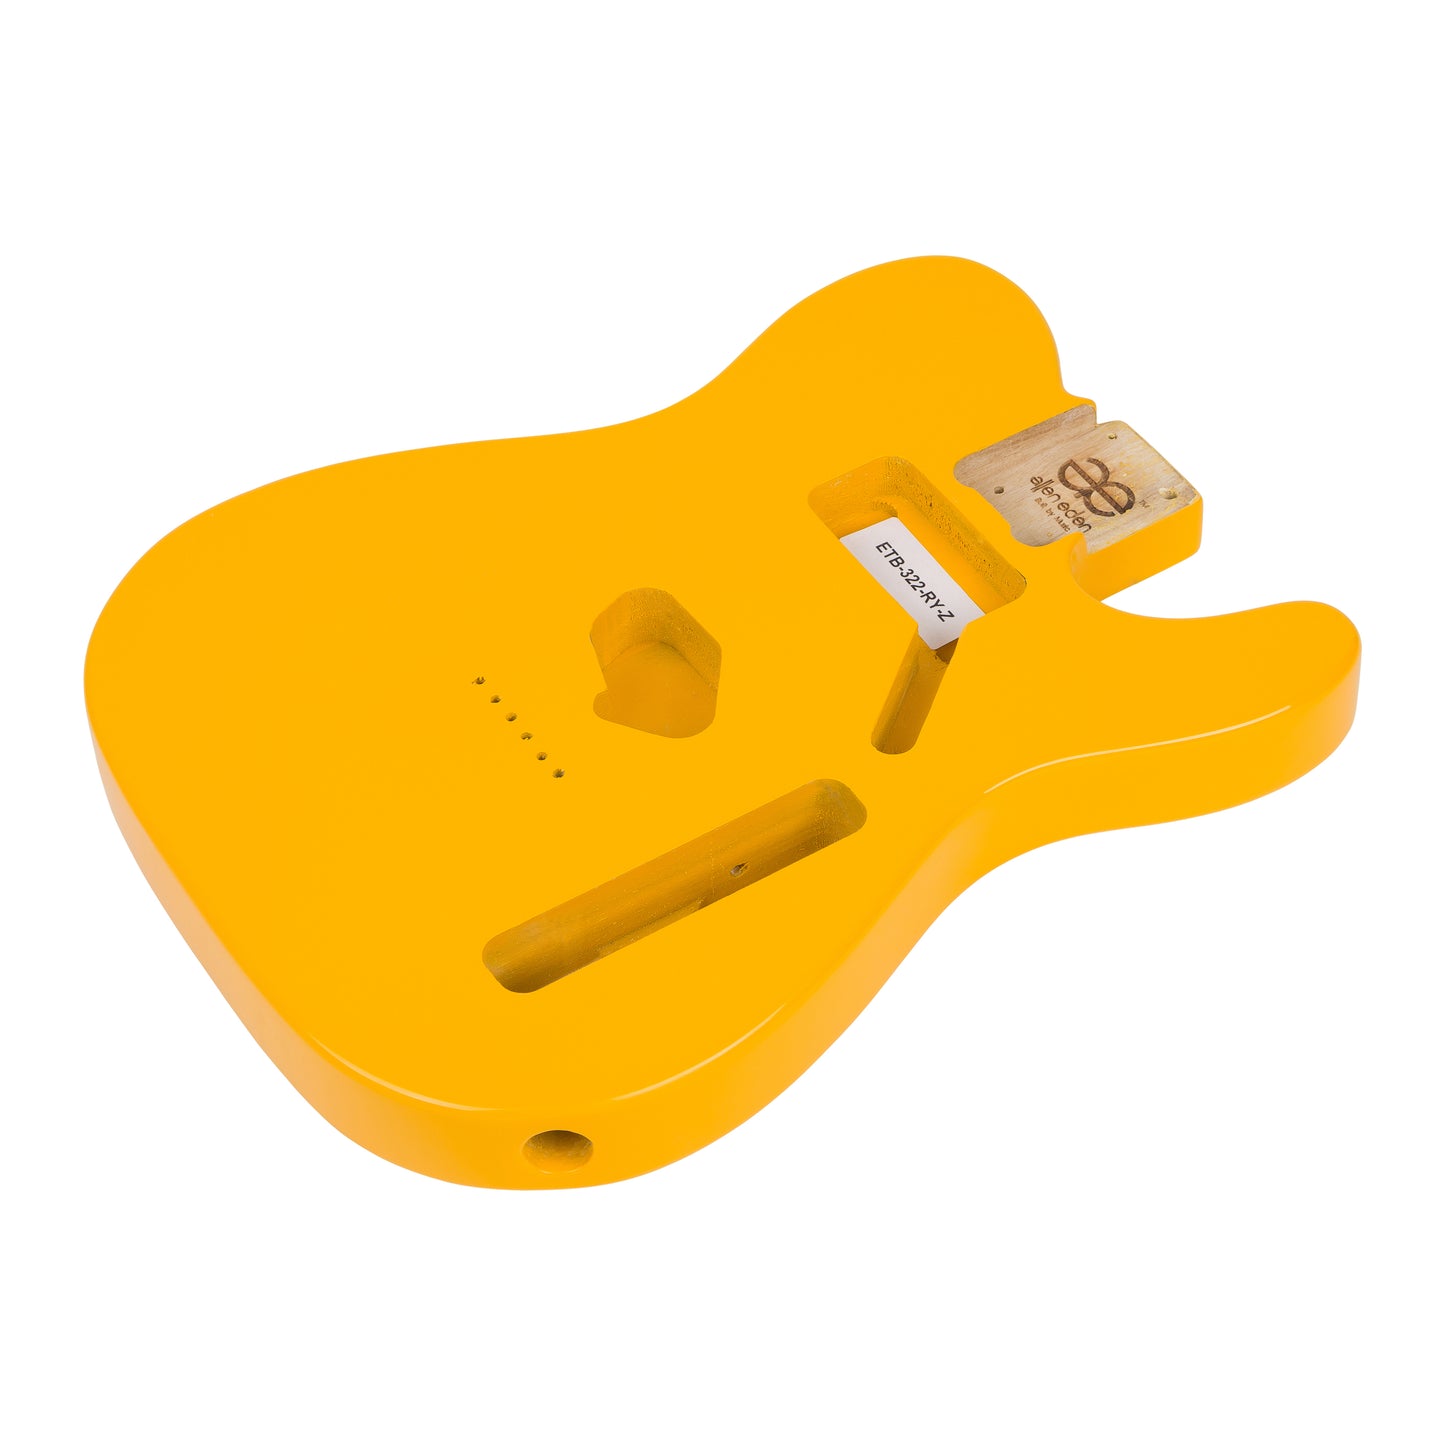 AE Guitars® T-Style Paulownia Replacement Guitar Body Royal Yellow